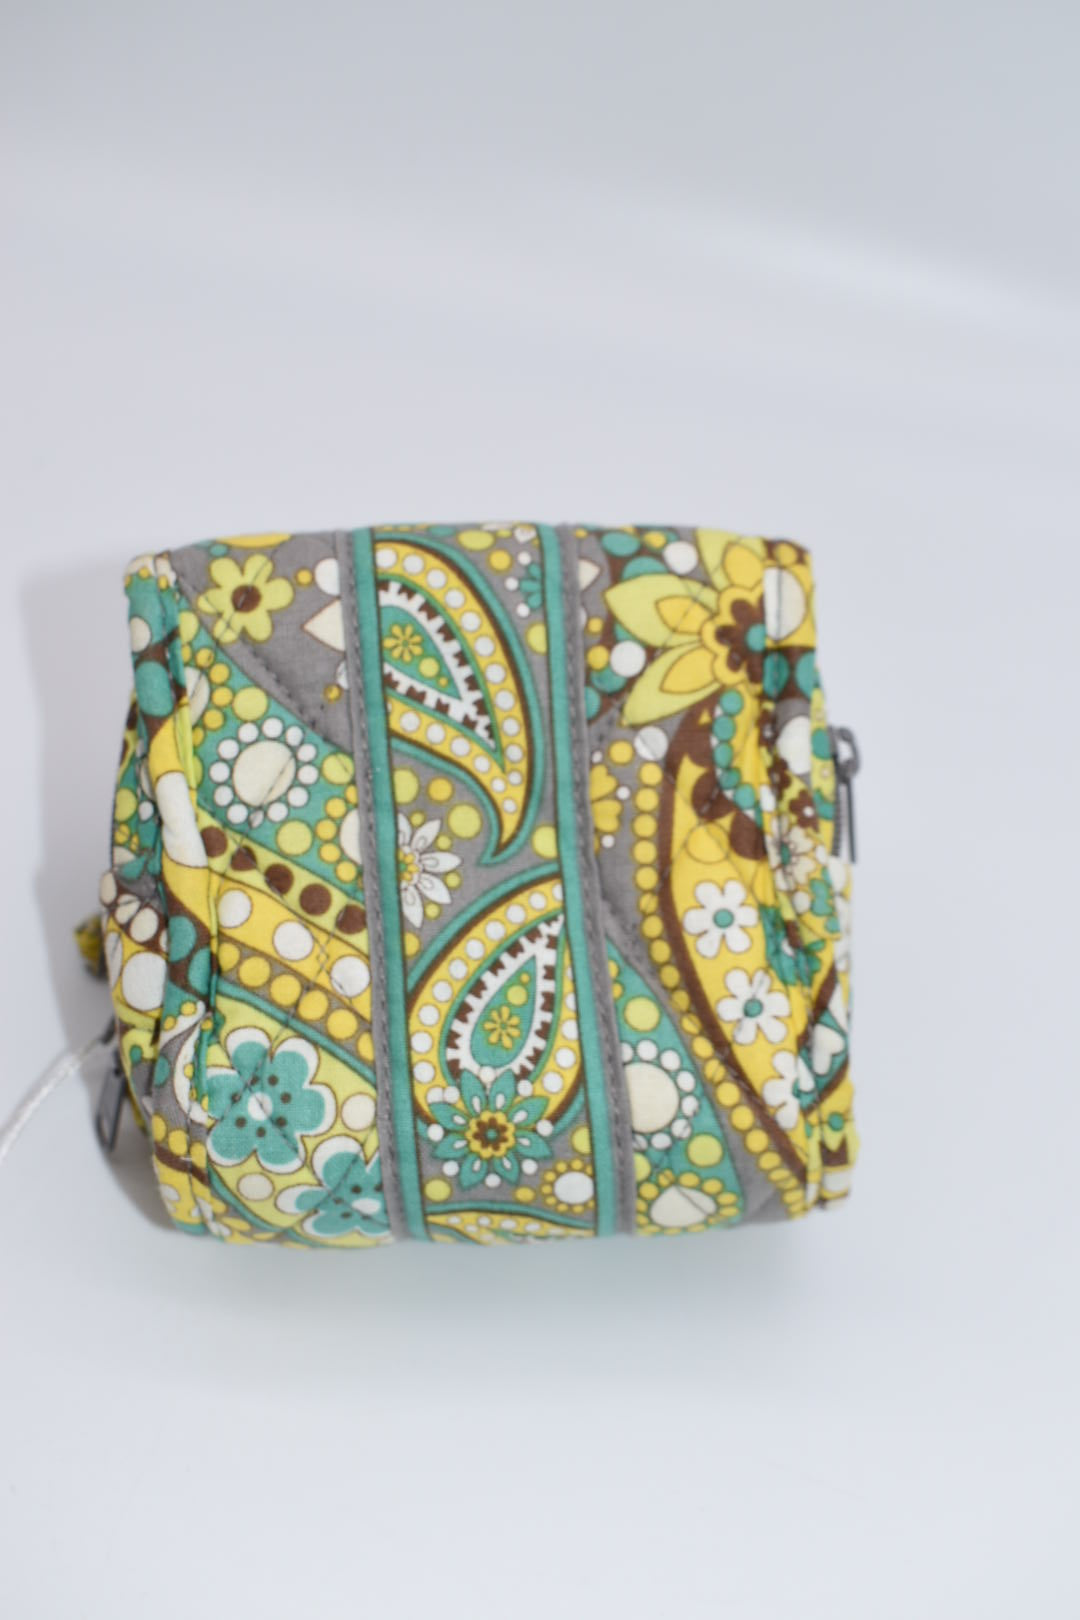 Vera Bradley Jewelry All Wrapped Up Travel Case in "Lemon Parfait" Pattern